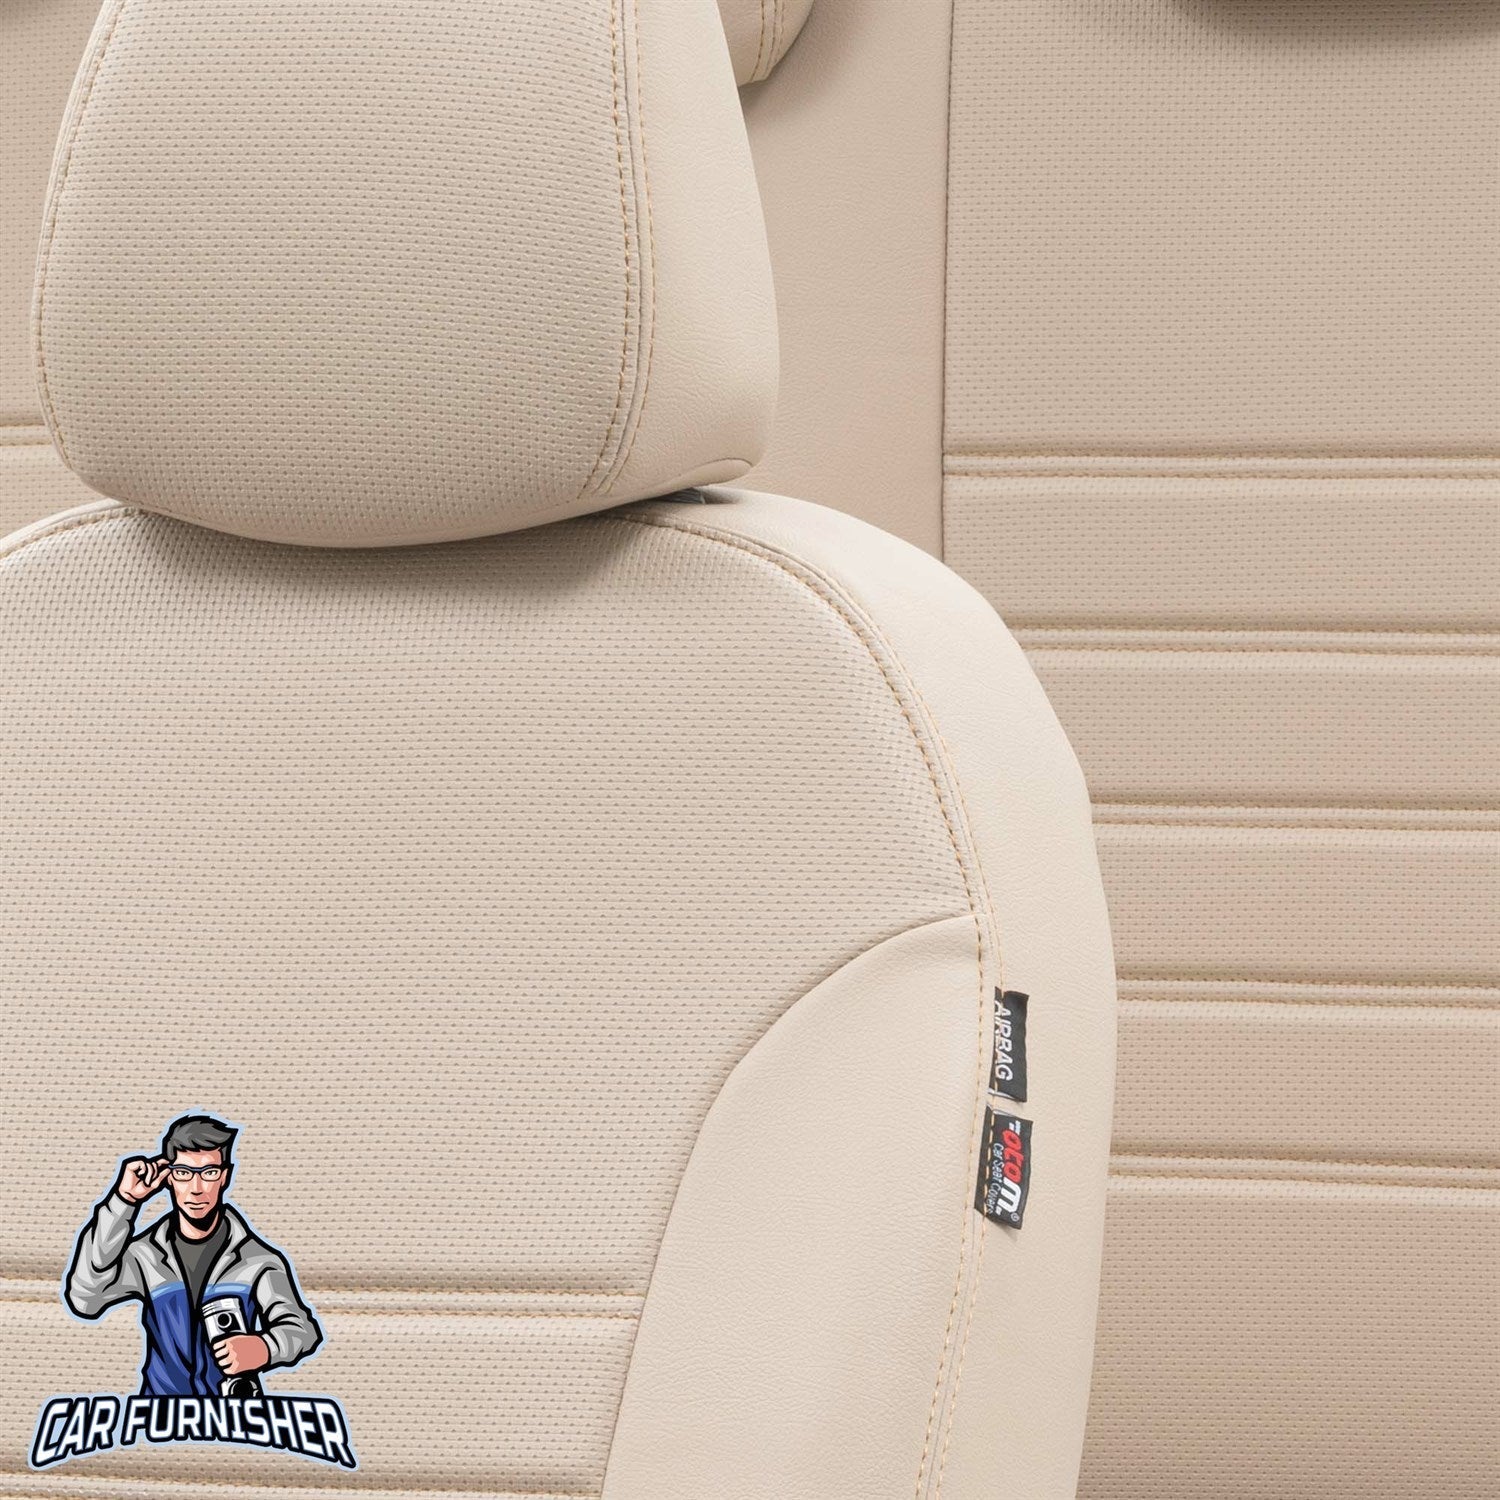 Chery Tiggo Car Seat Covers 2008-2011 New York Design Beige Full Set (5 Seats + Handrest) Leather & Fabric